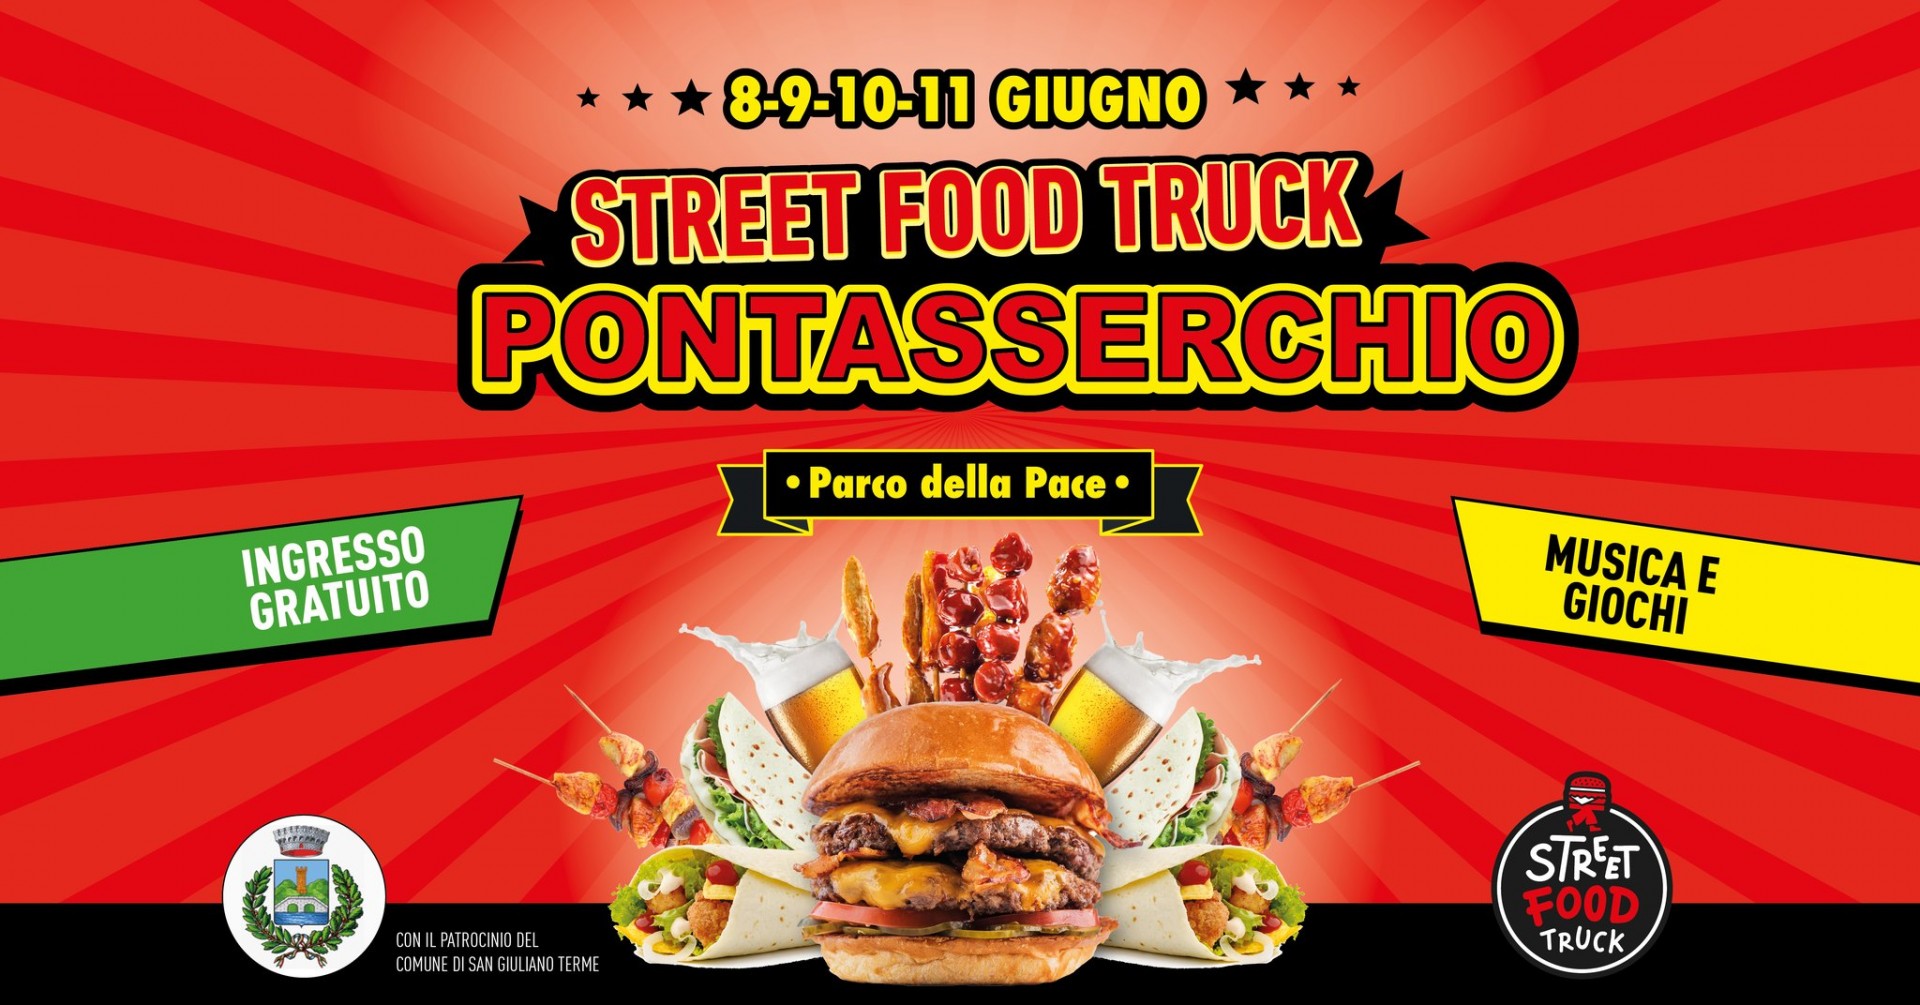 Street Food Truck Pontasserchio